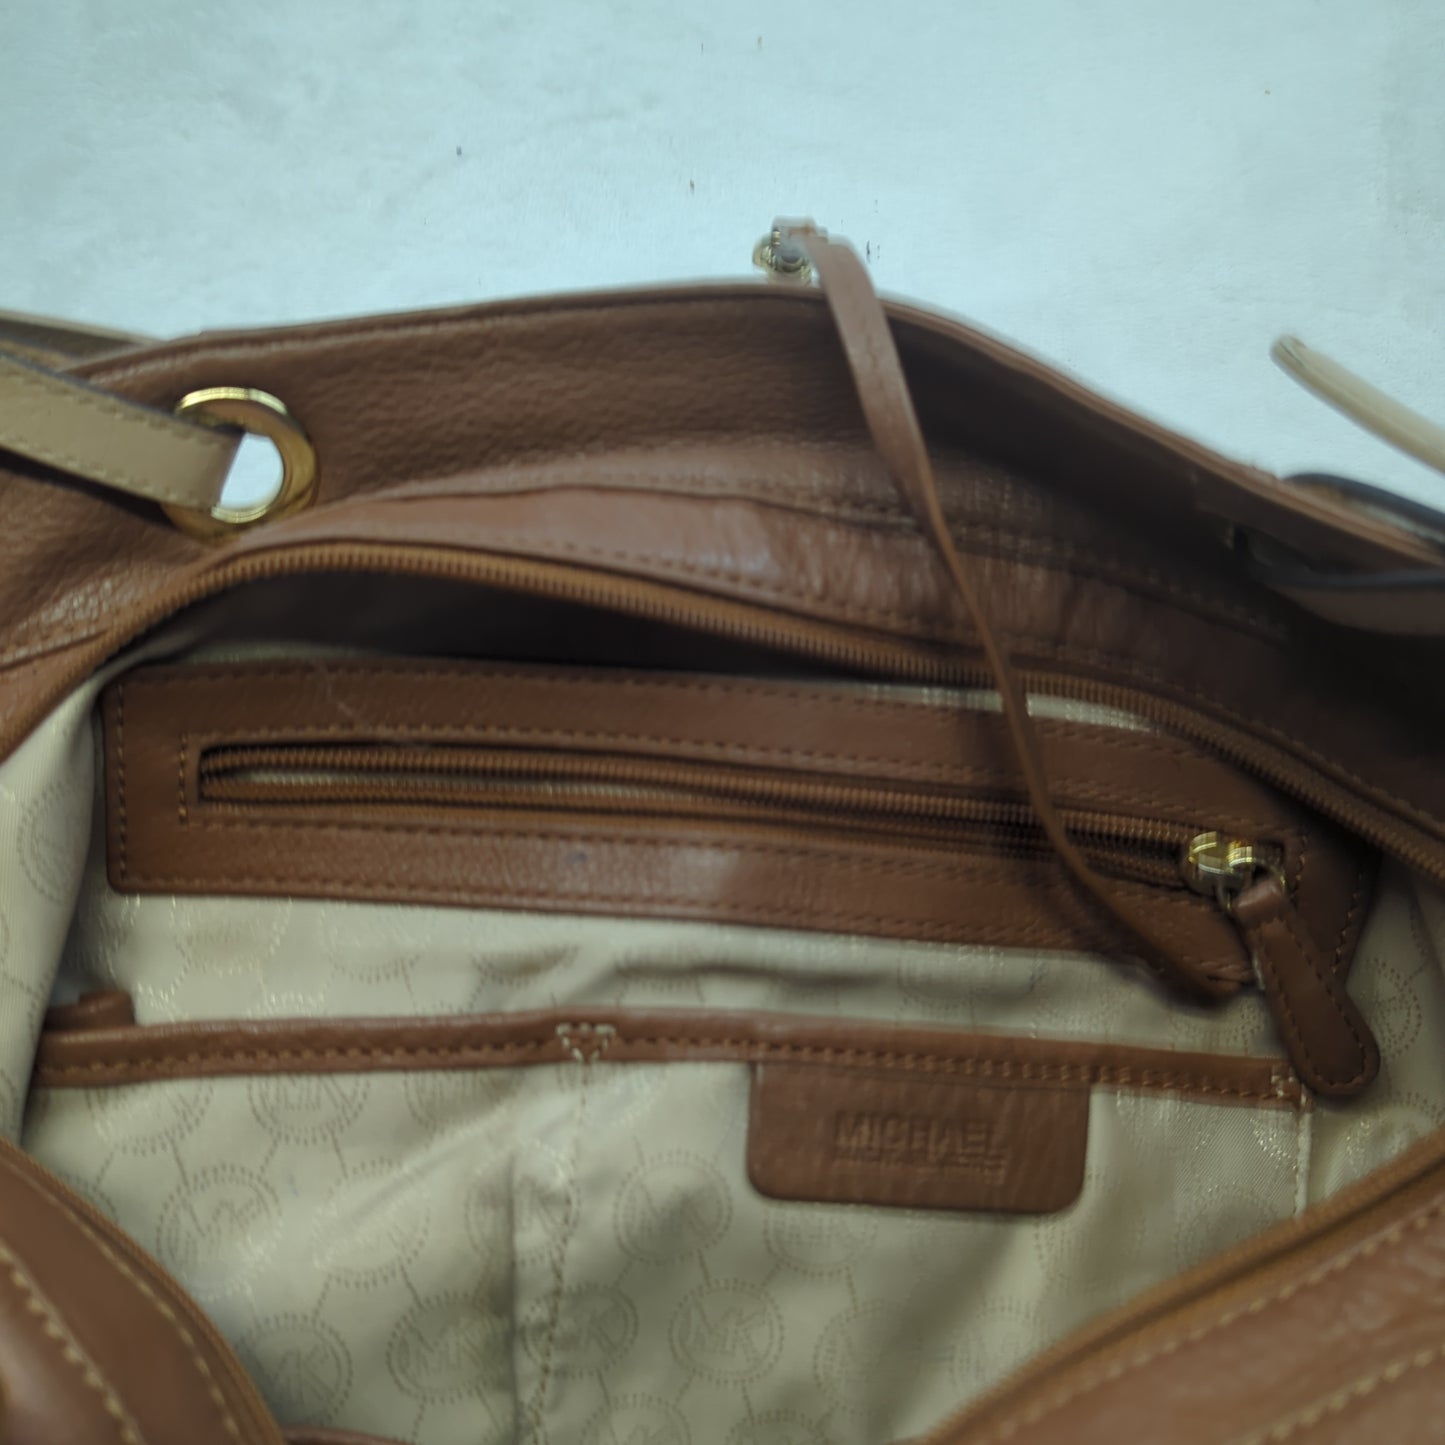 Michael Kors Brown Leather Shoulder Tote Bag Handbag Women